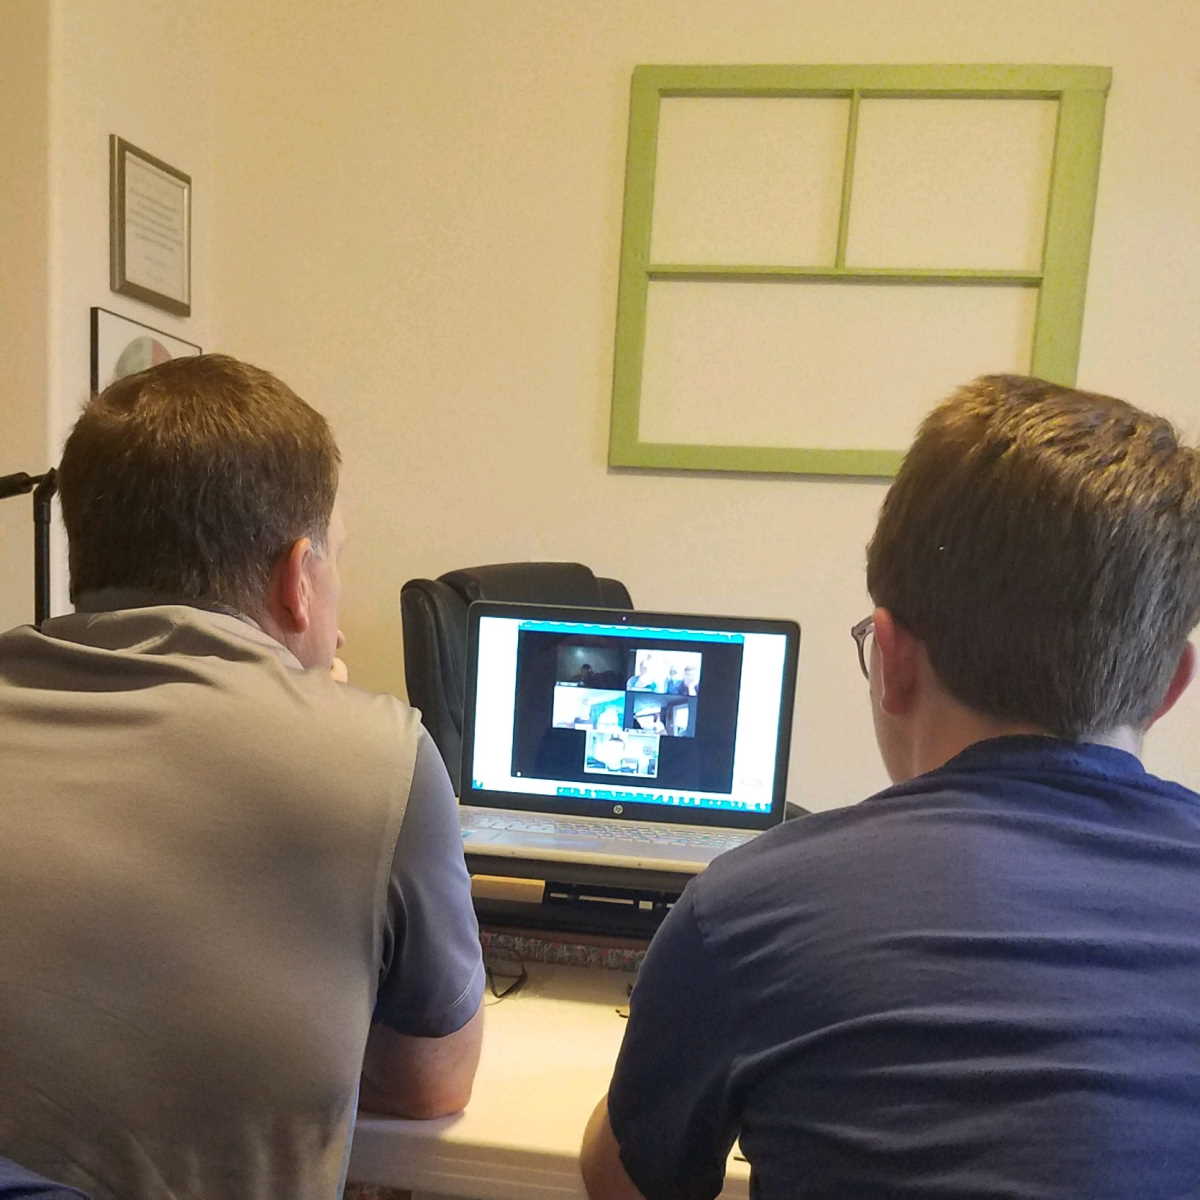 Two boys lean towards a computer screen.